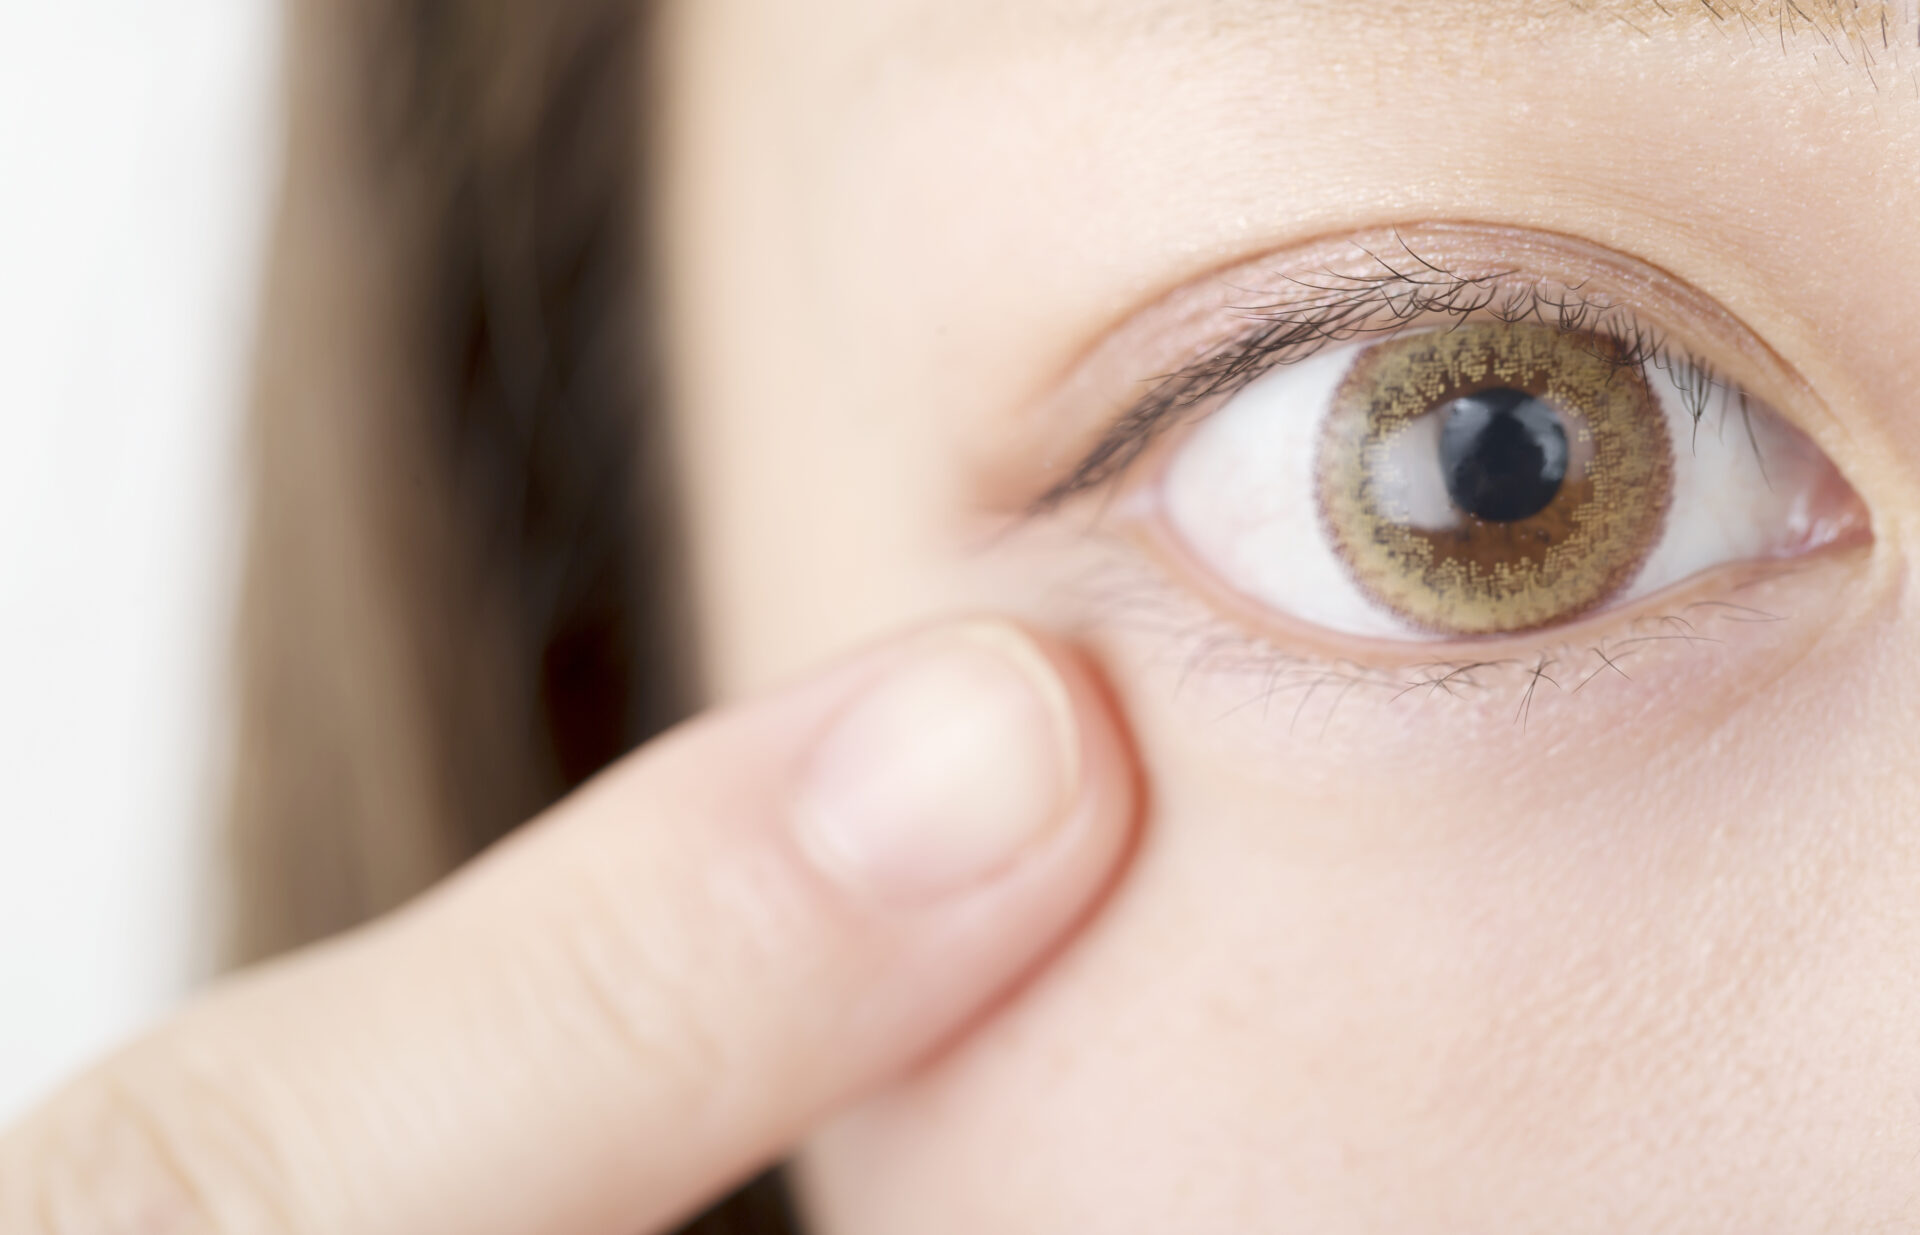 正常眼圧緑内障の症状